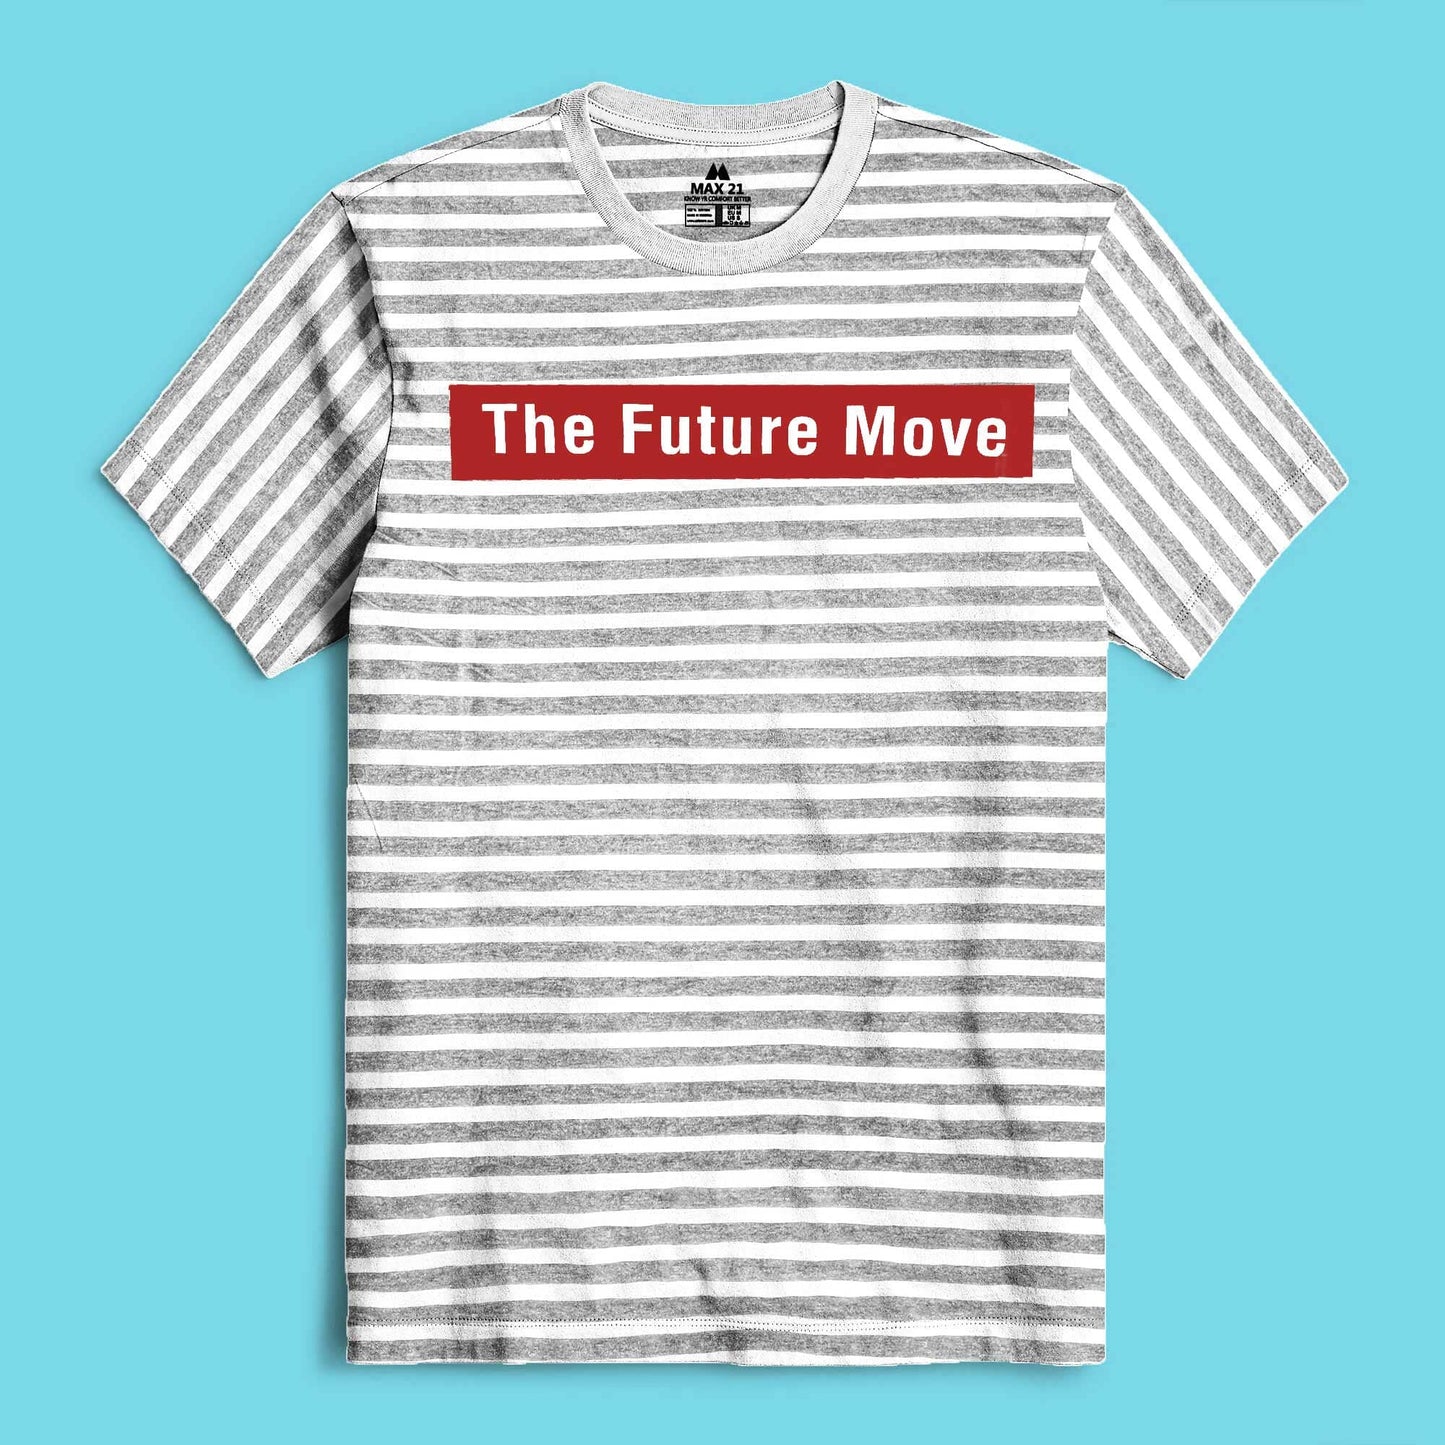 Max 21 Men's Future Move Printed Stripes Style Short Sleeve Tee Shirt Men's Tee Shirt SZK White & Grey S 